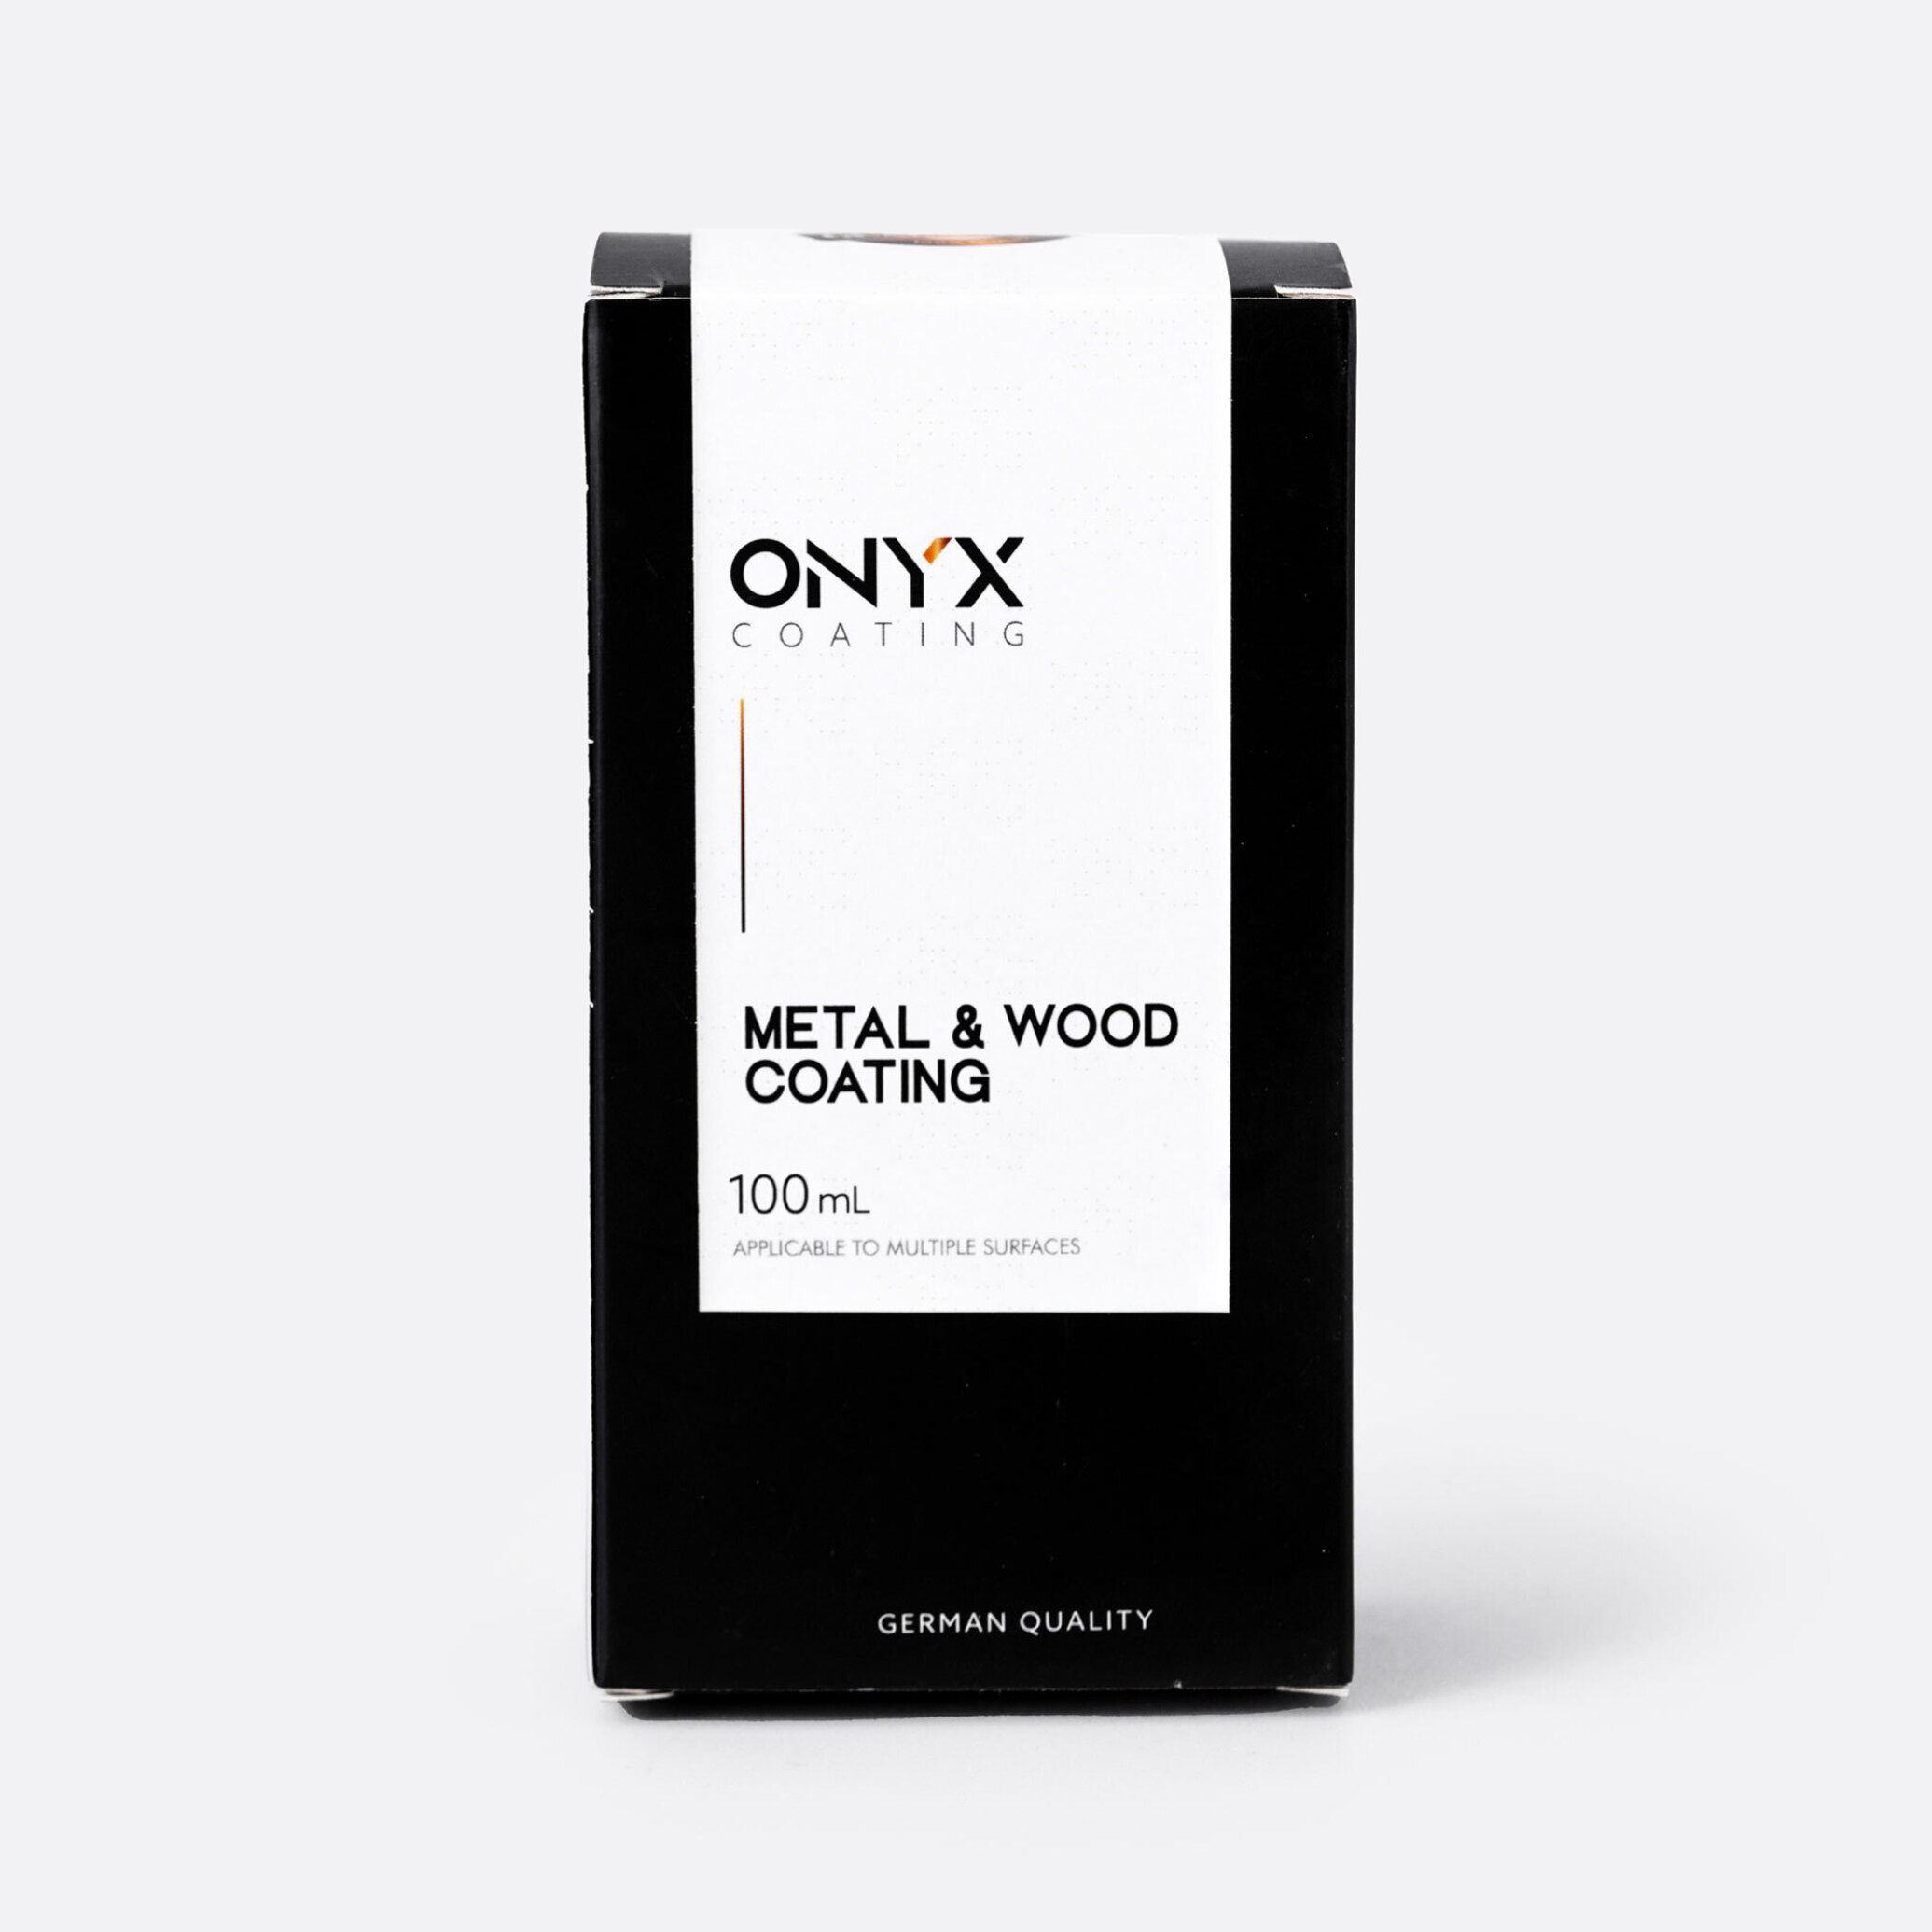  Onyx Metal & Wood Coating 